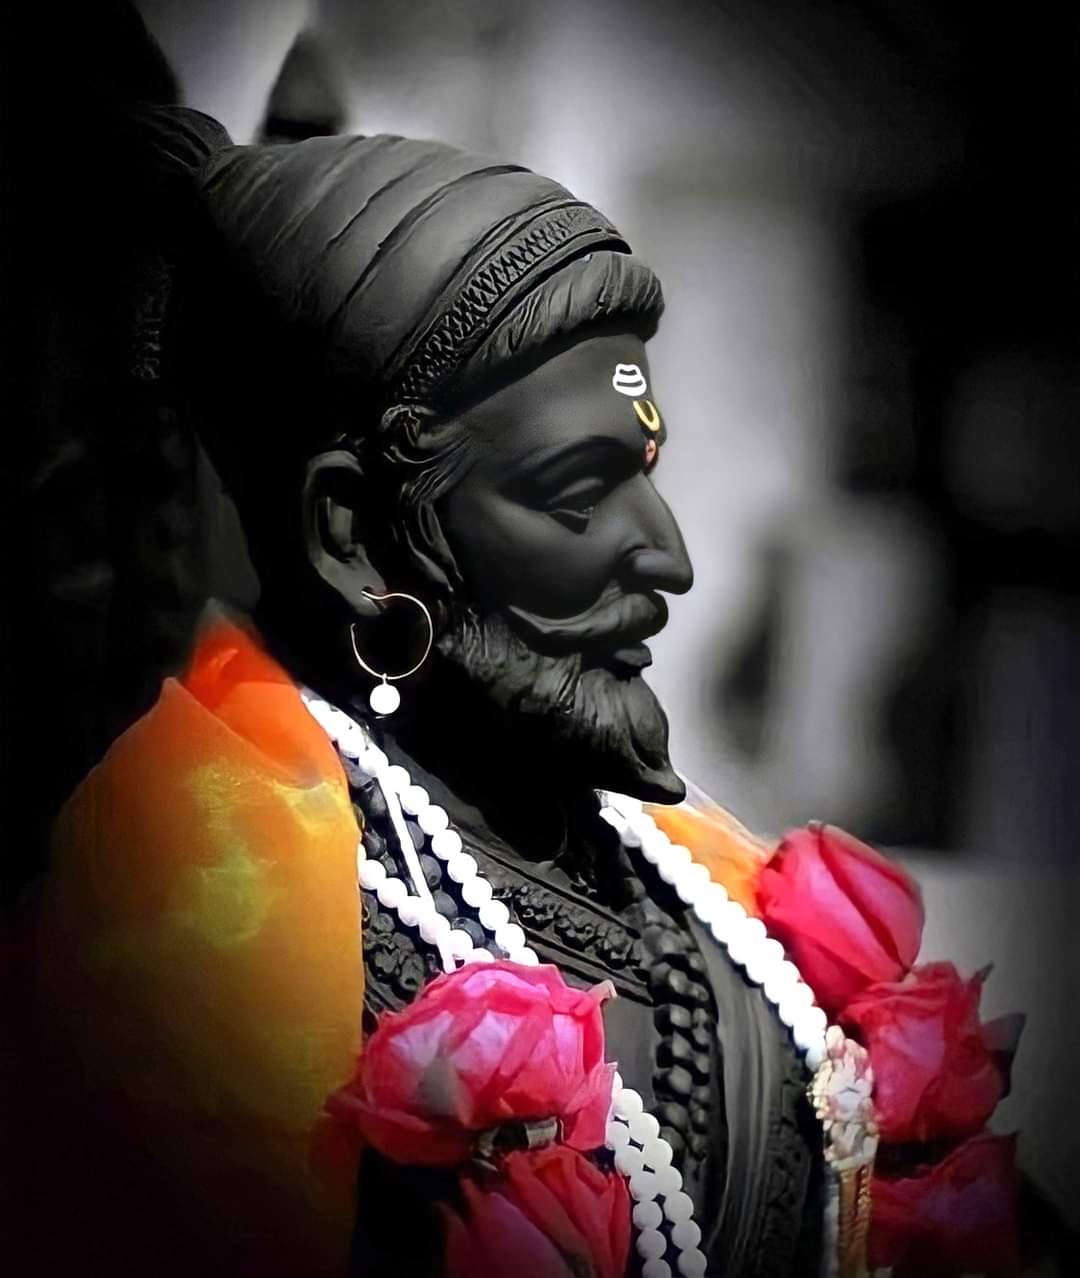 Astonishing Compilation of Shivaji Maharaj Images – 999+ High-Quality 4K Shivaji Maharaj Photos